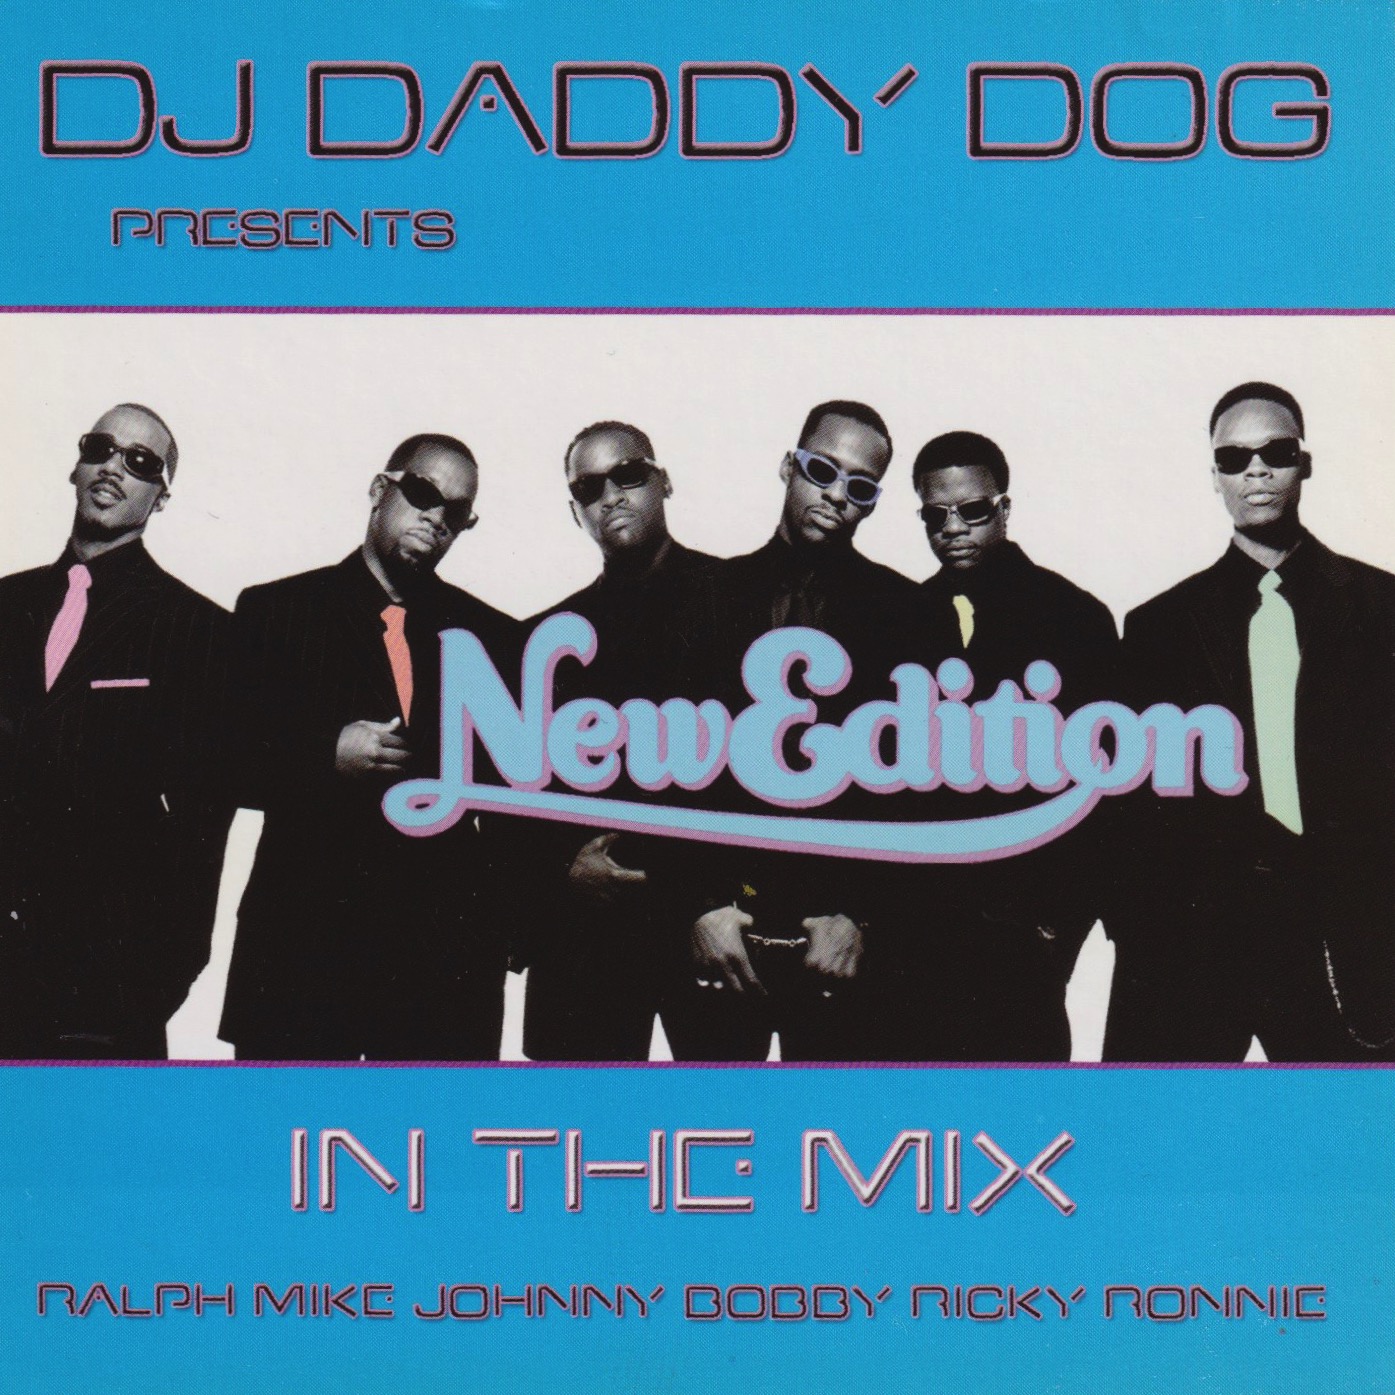 DJ Daddy Dog's New Edition Mixtape Digital DL